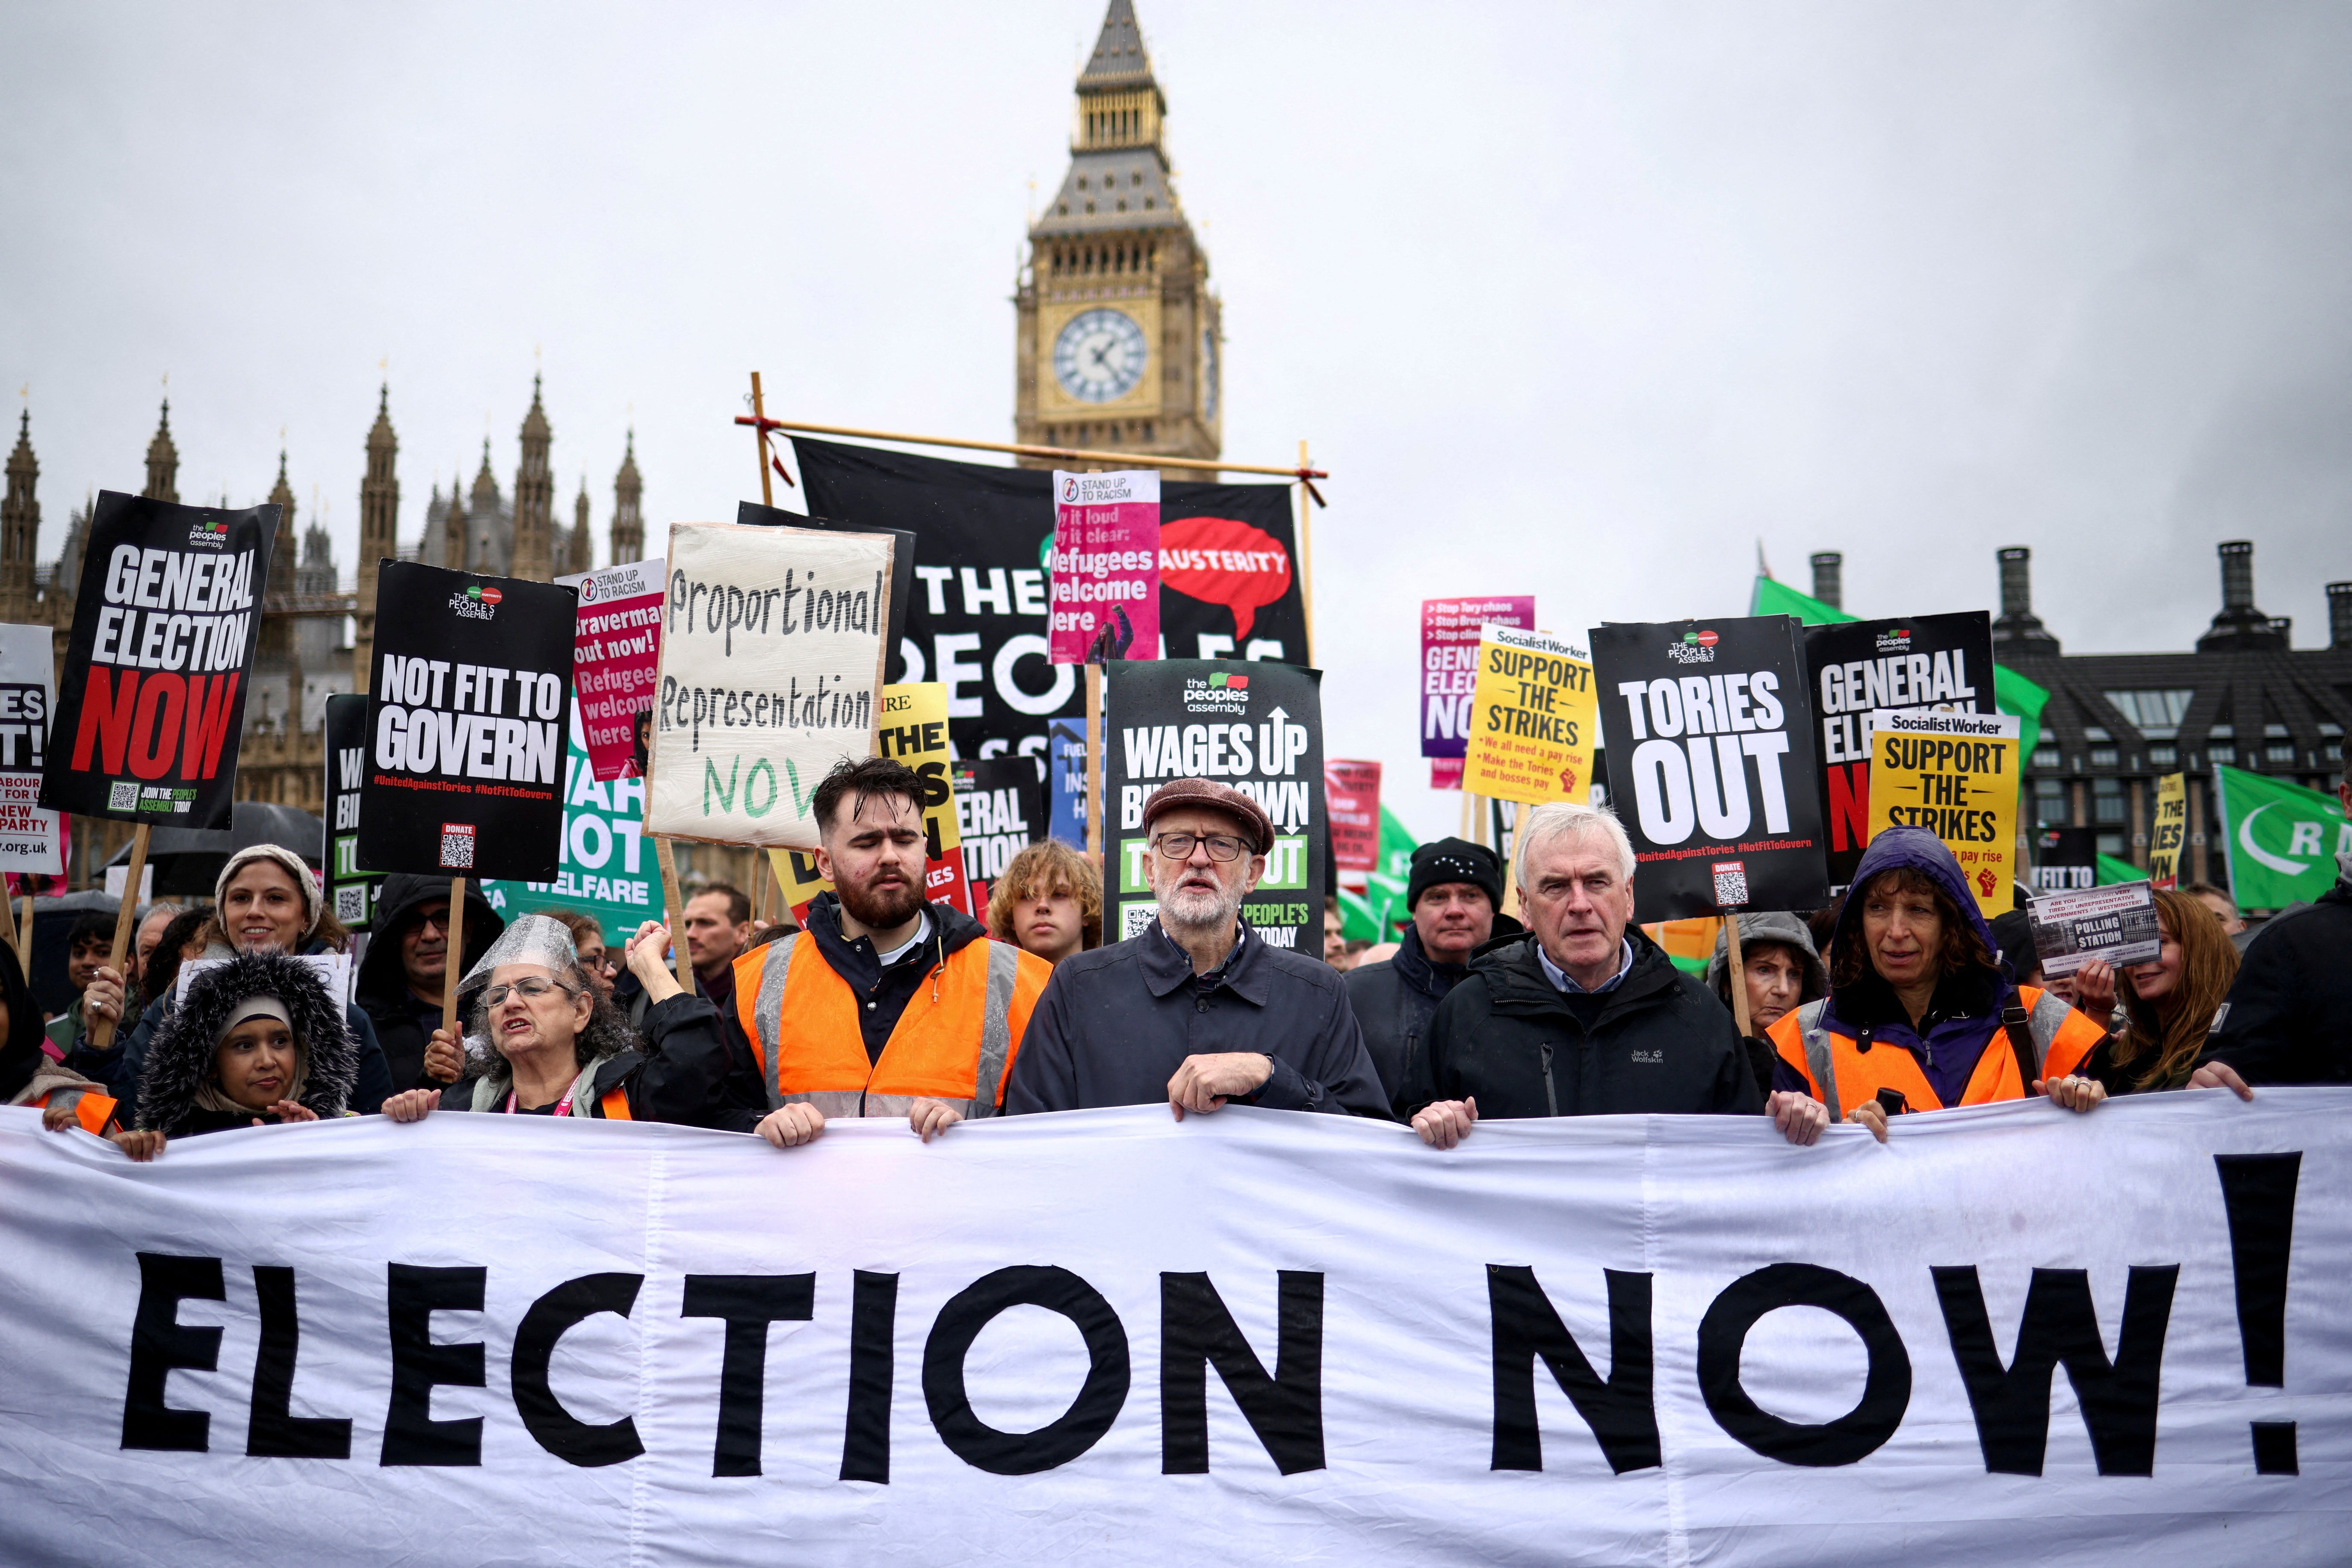 Jeremy Corbyn joined the demonstration near parliament